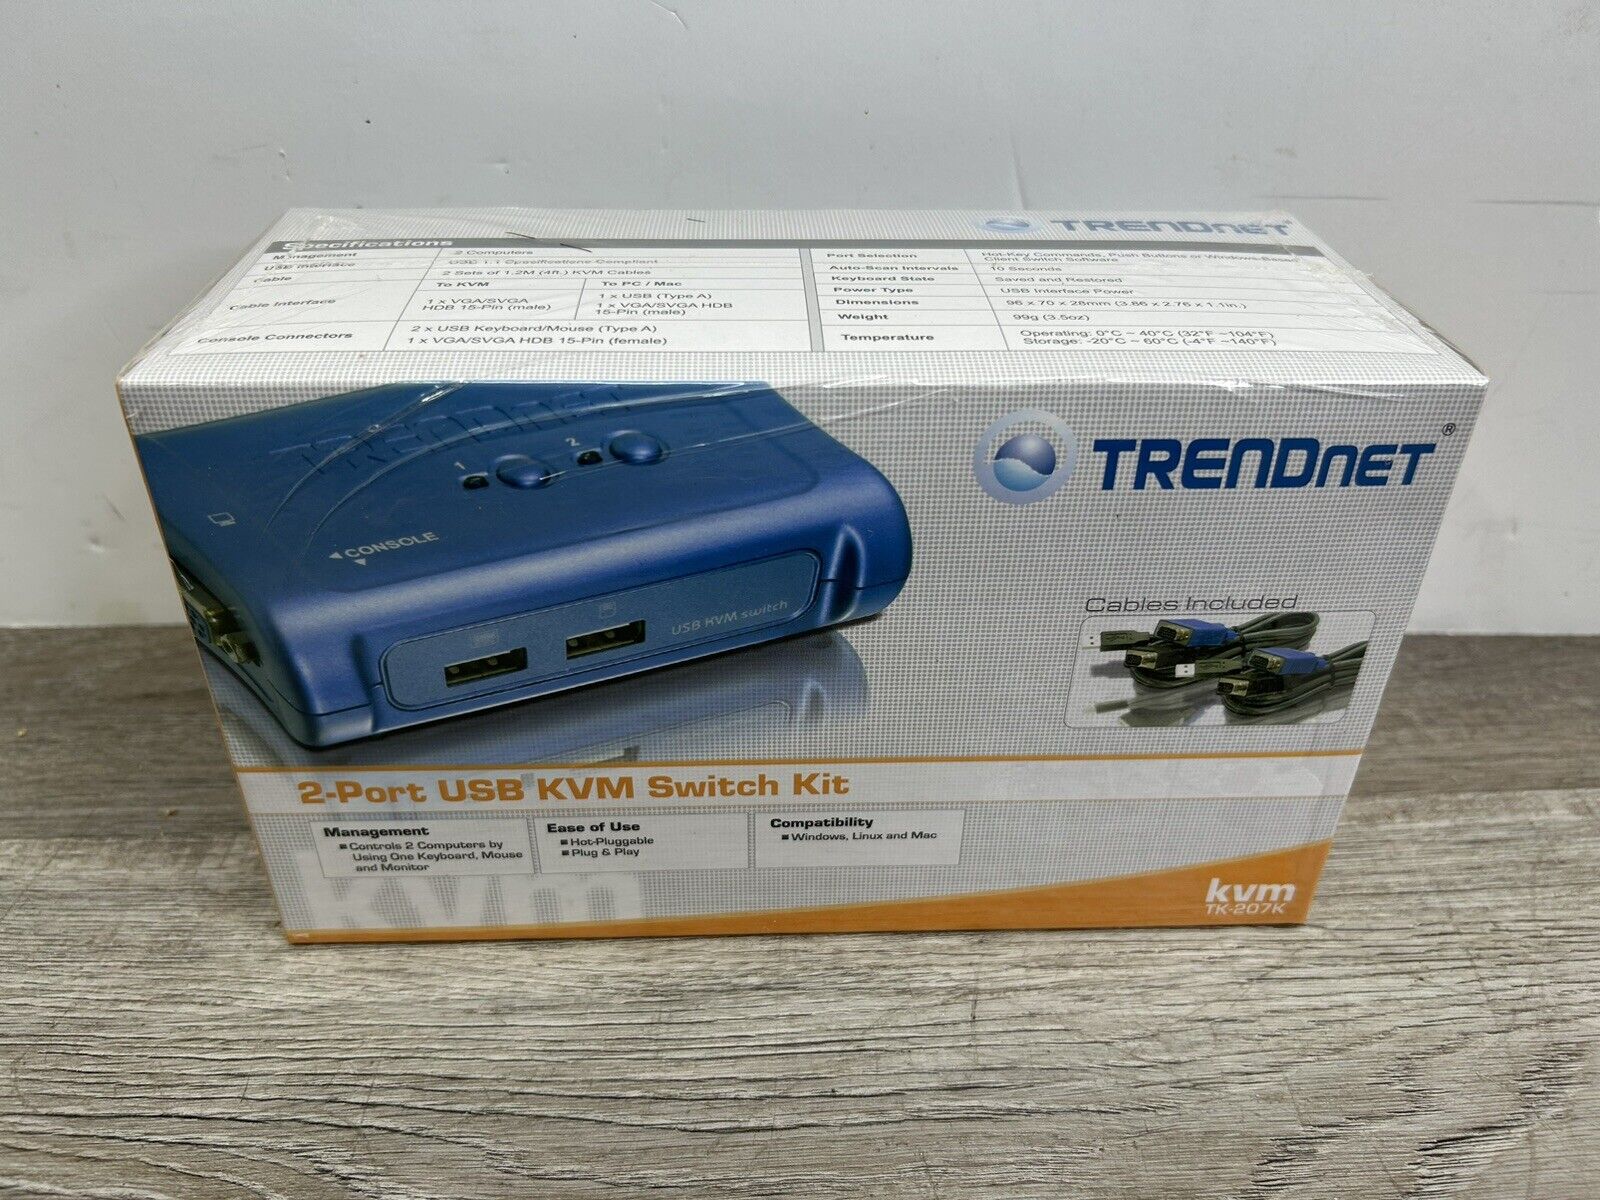 *NEW IN BOX *Trendnet TK-207K 2 PORT USB KVM SWITCH KIT